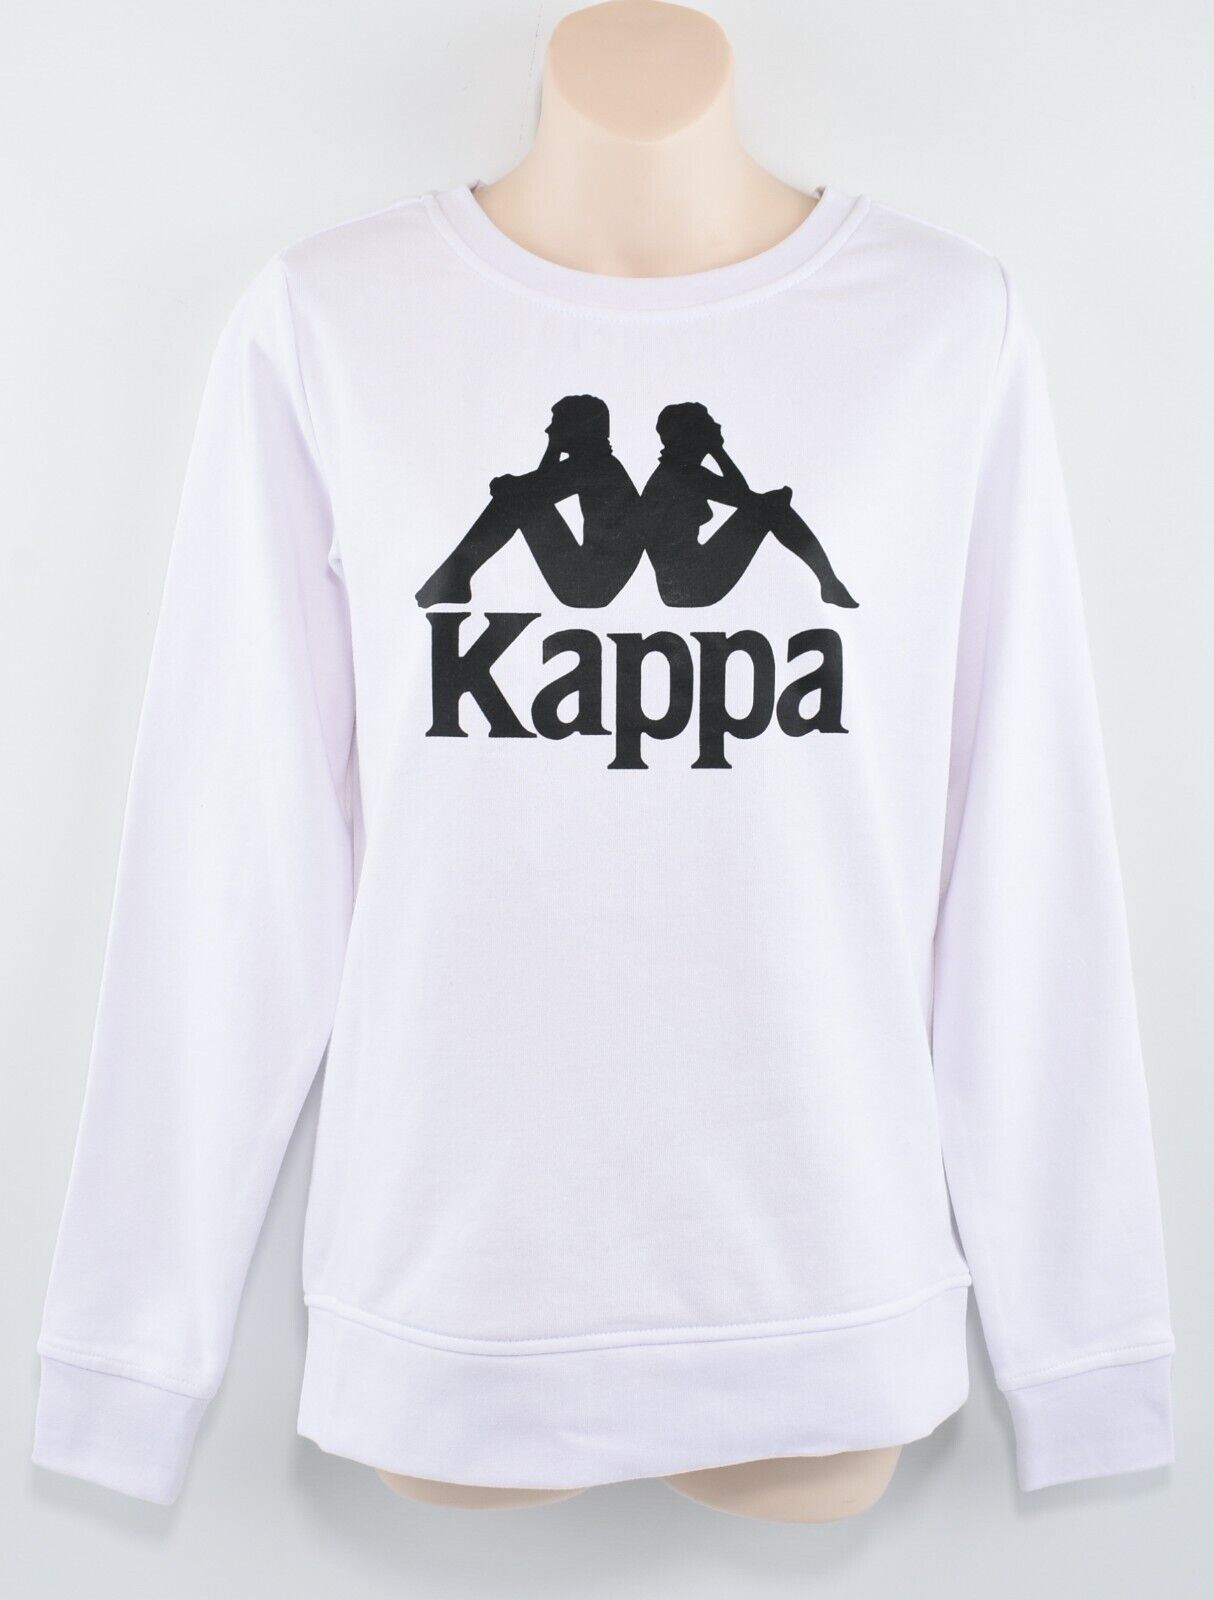 KAPPA Women's Zemin Crew Slim Fit Sweatshirt, White/Black Logo, size XS (UK 8)